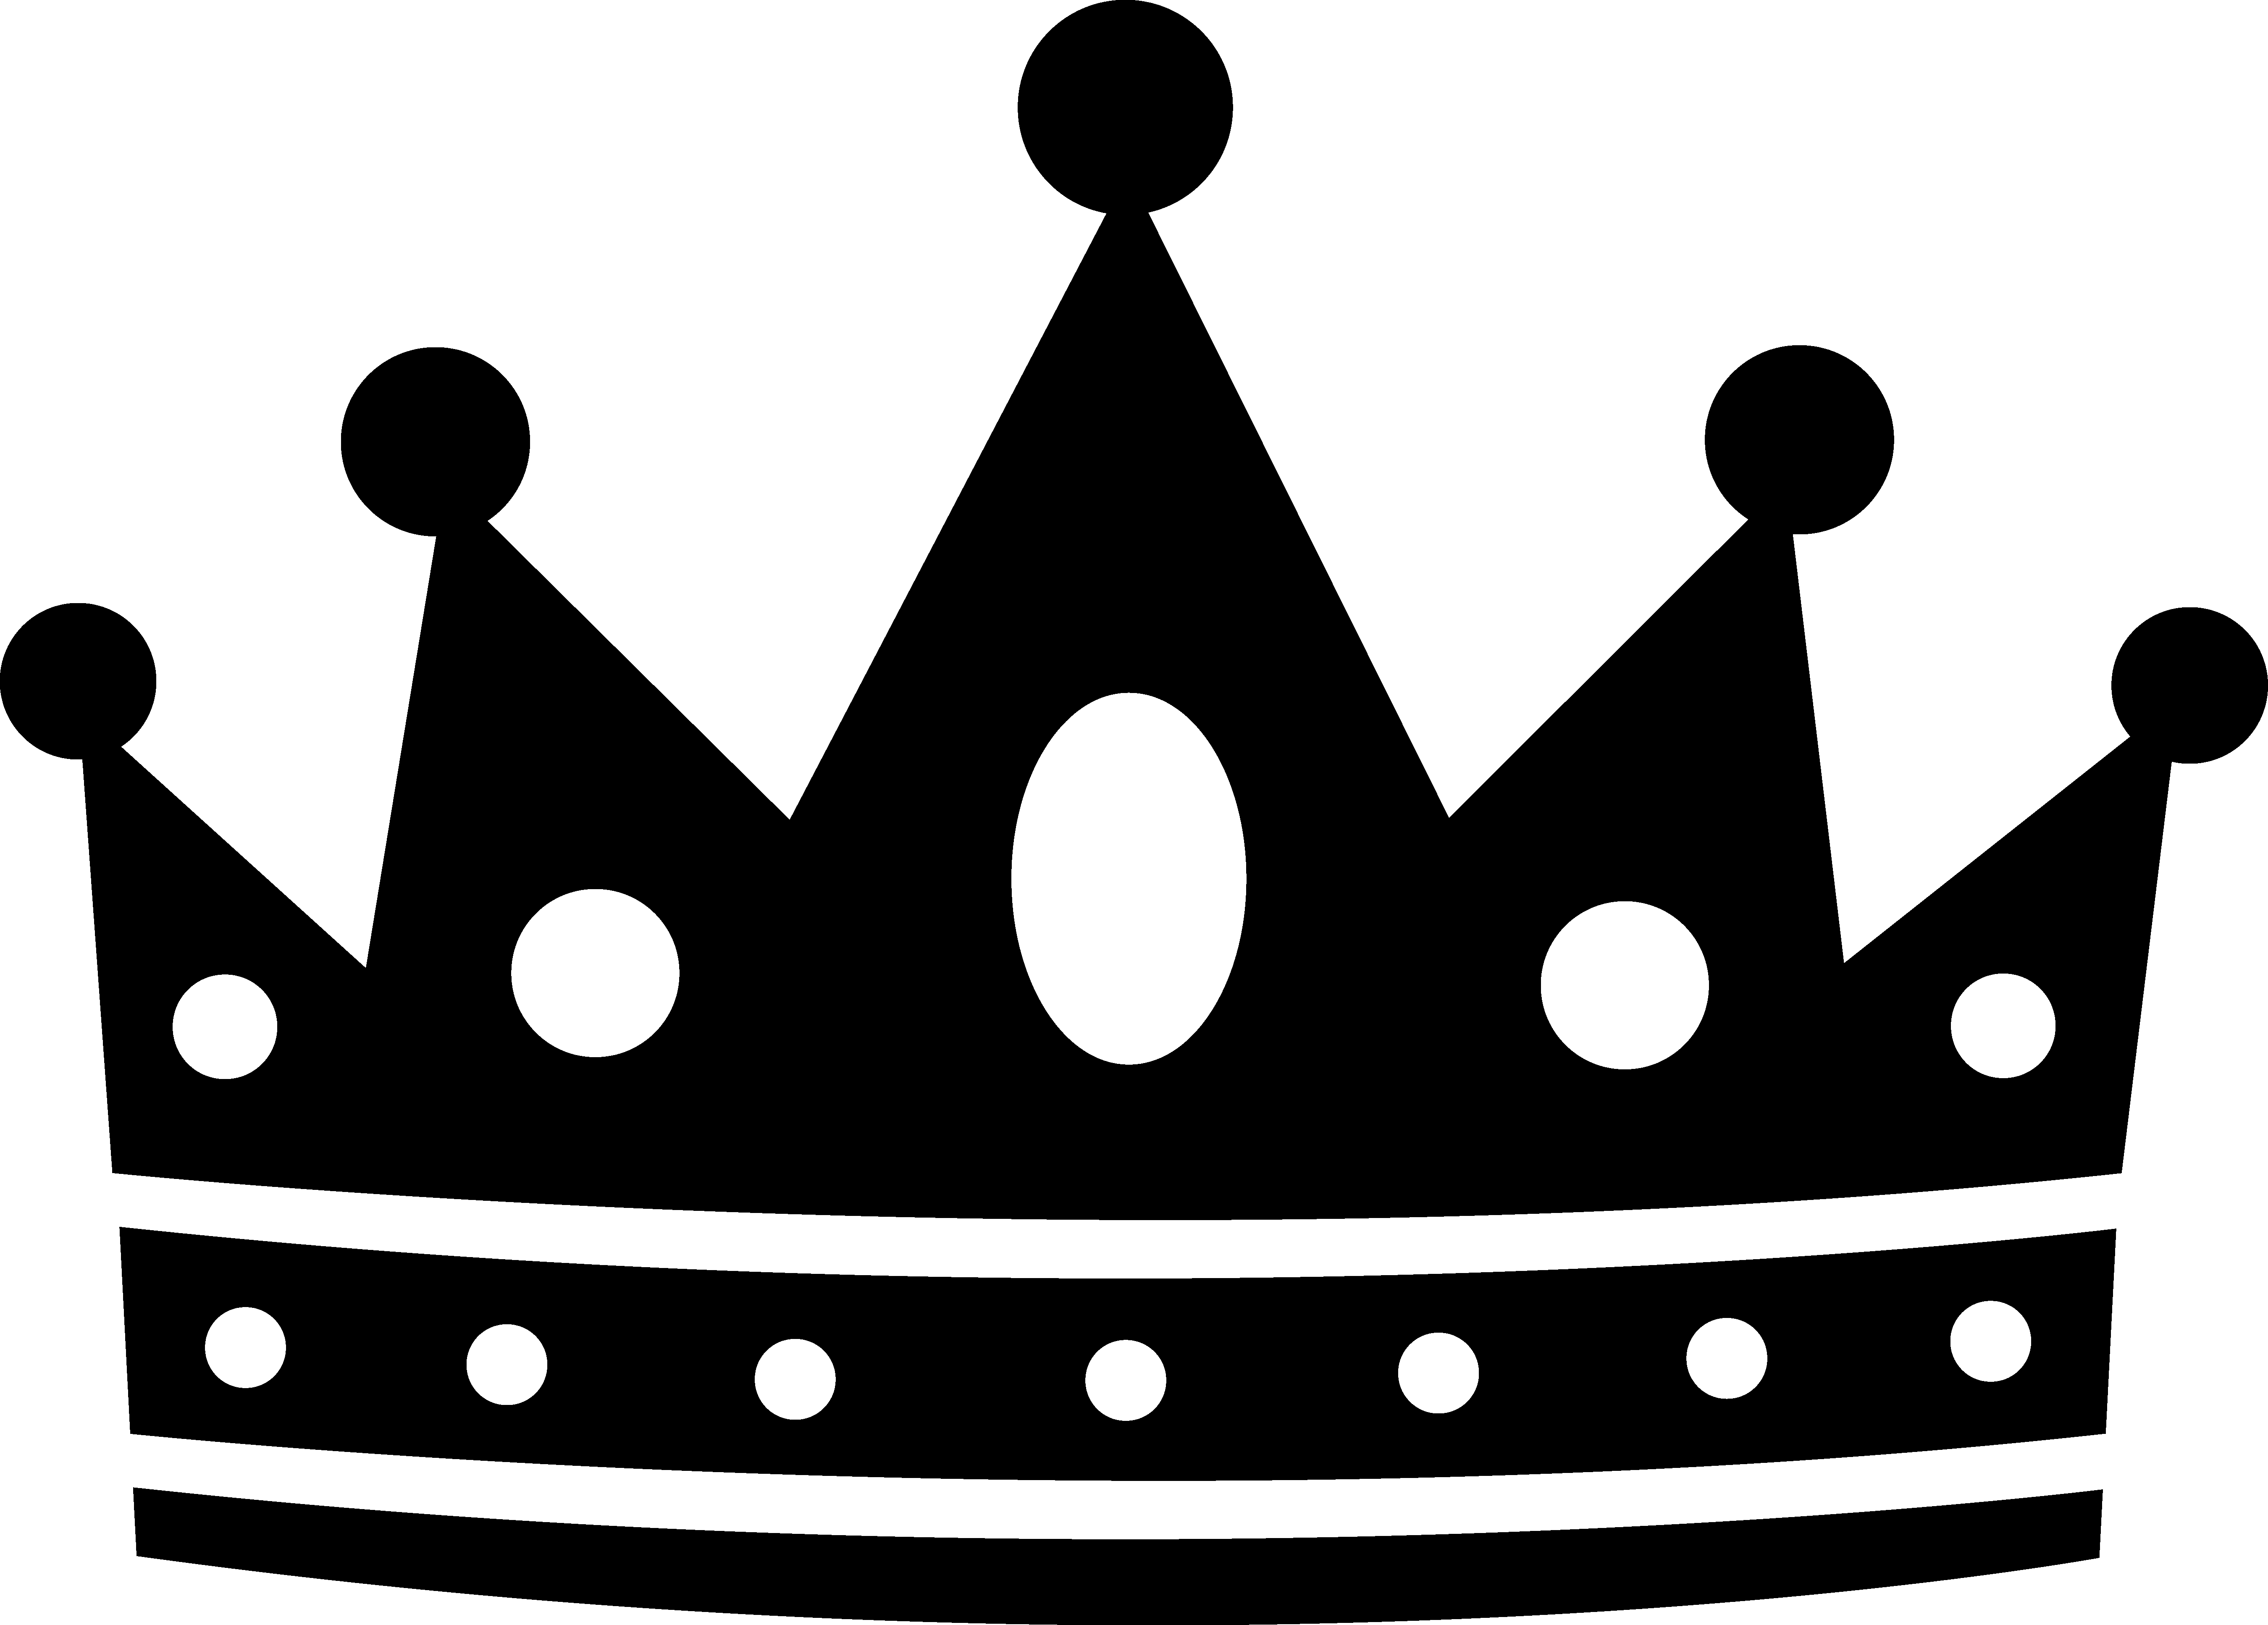 King And Queen Crown Logo by Amos Gulgowski